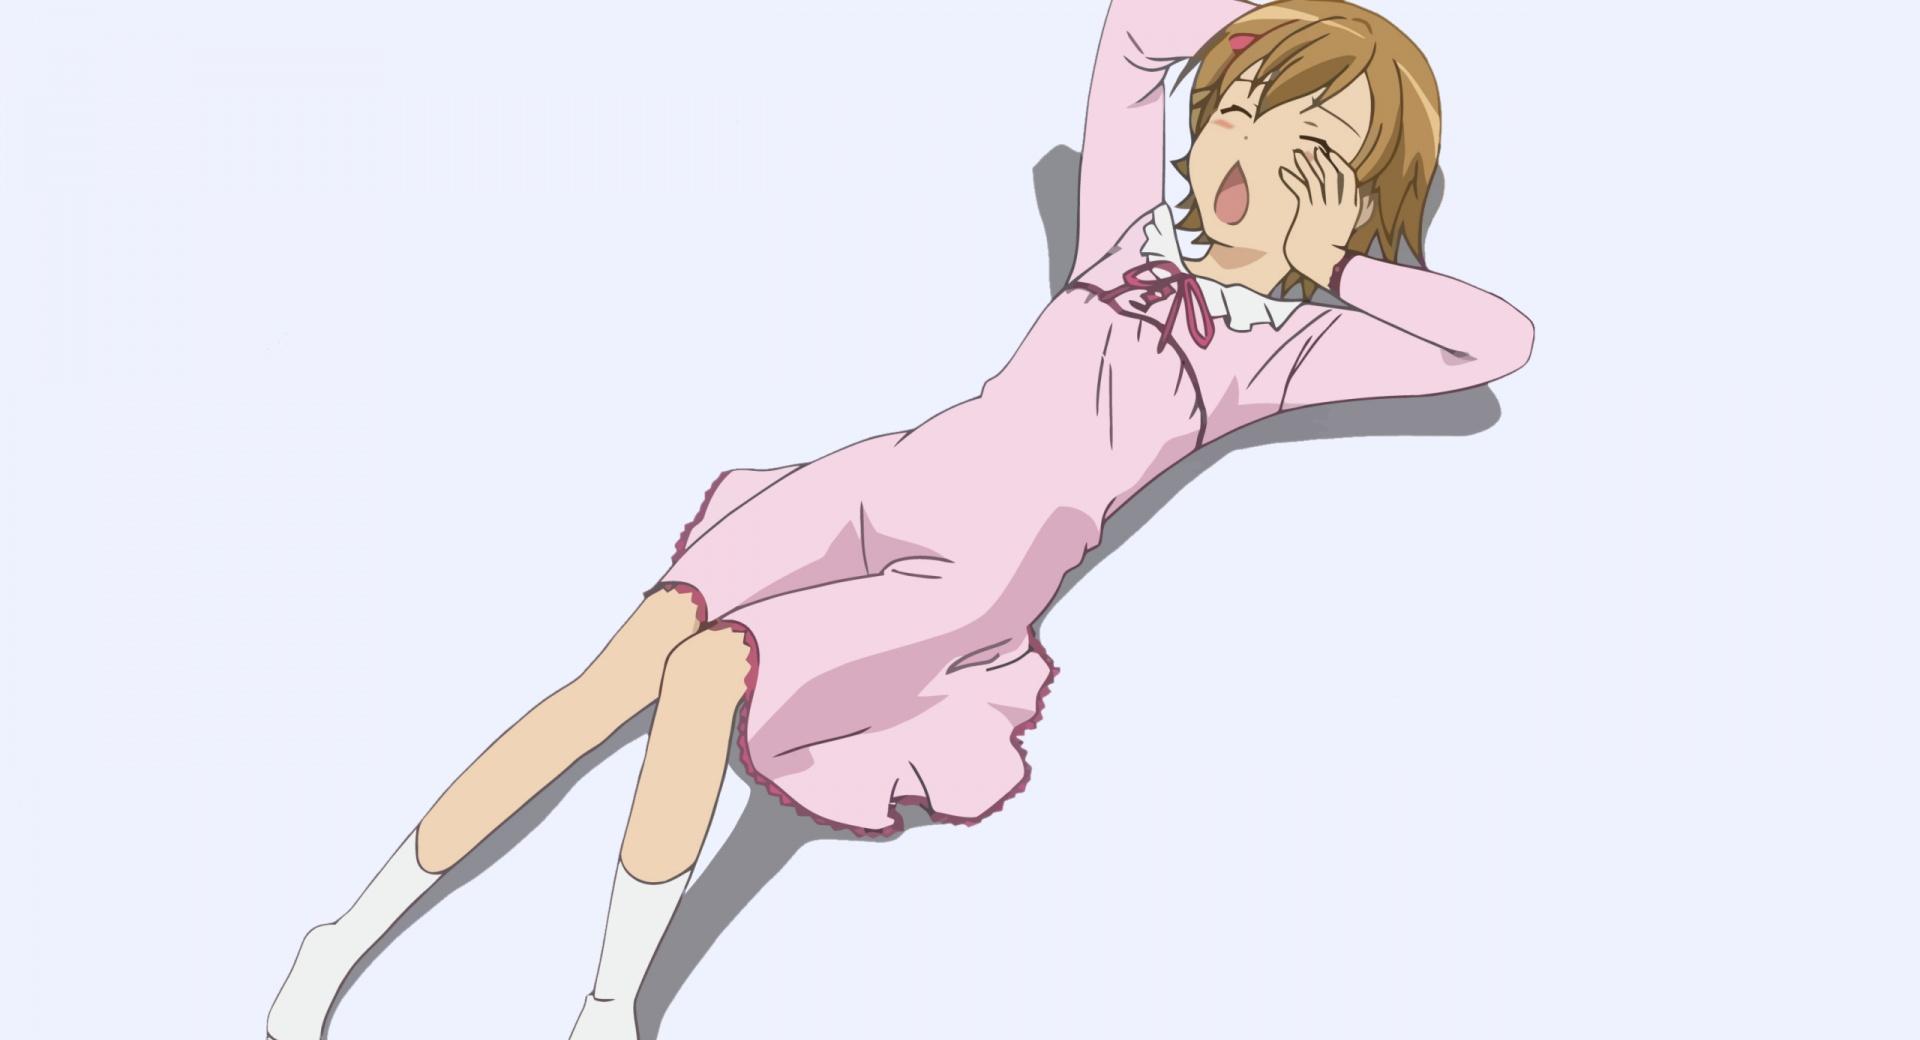 Anime Sleeping Girl at 2048 x 2048 iPad size wallpapers HD quality